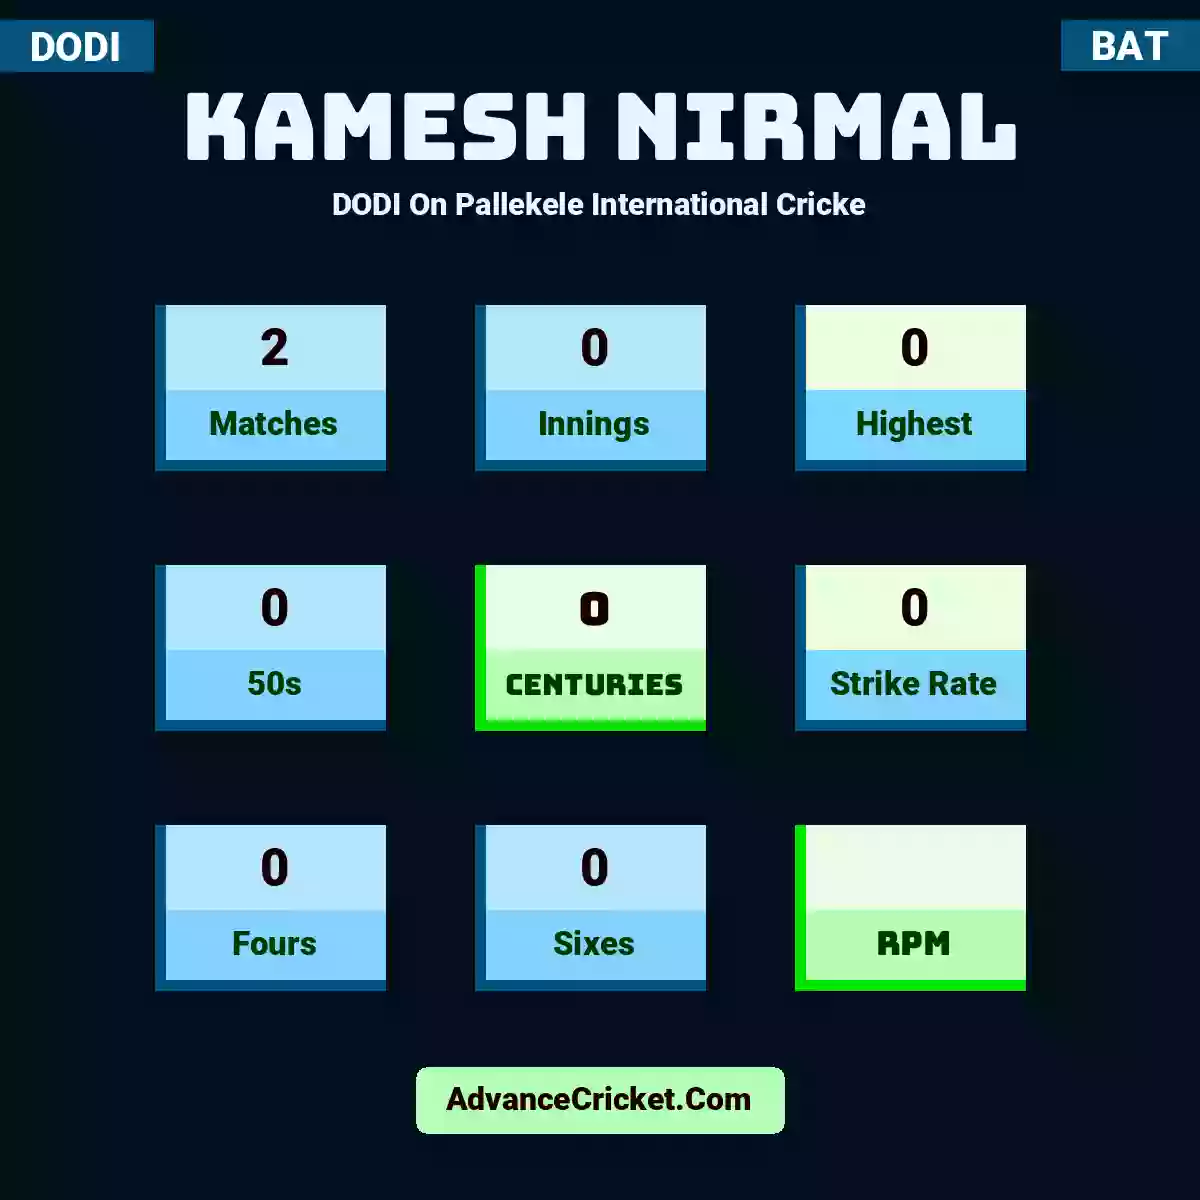 Kamesh Nirmal DODI  On Pallekele International Cricke, Kamesh Nirmal played 2 matches, scored 0 runs as highest, 0 half-centuries, and 0 centuries, with a strike rate of 0. K.Nirmal hit 0 fours and 0 sixes.